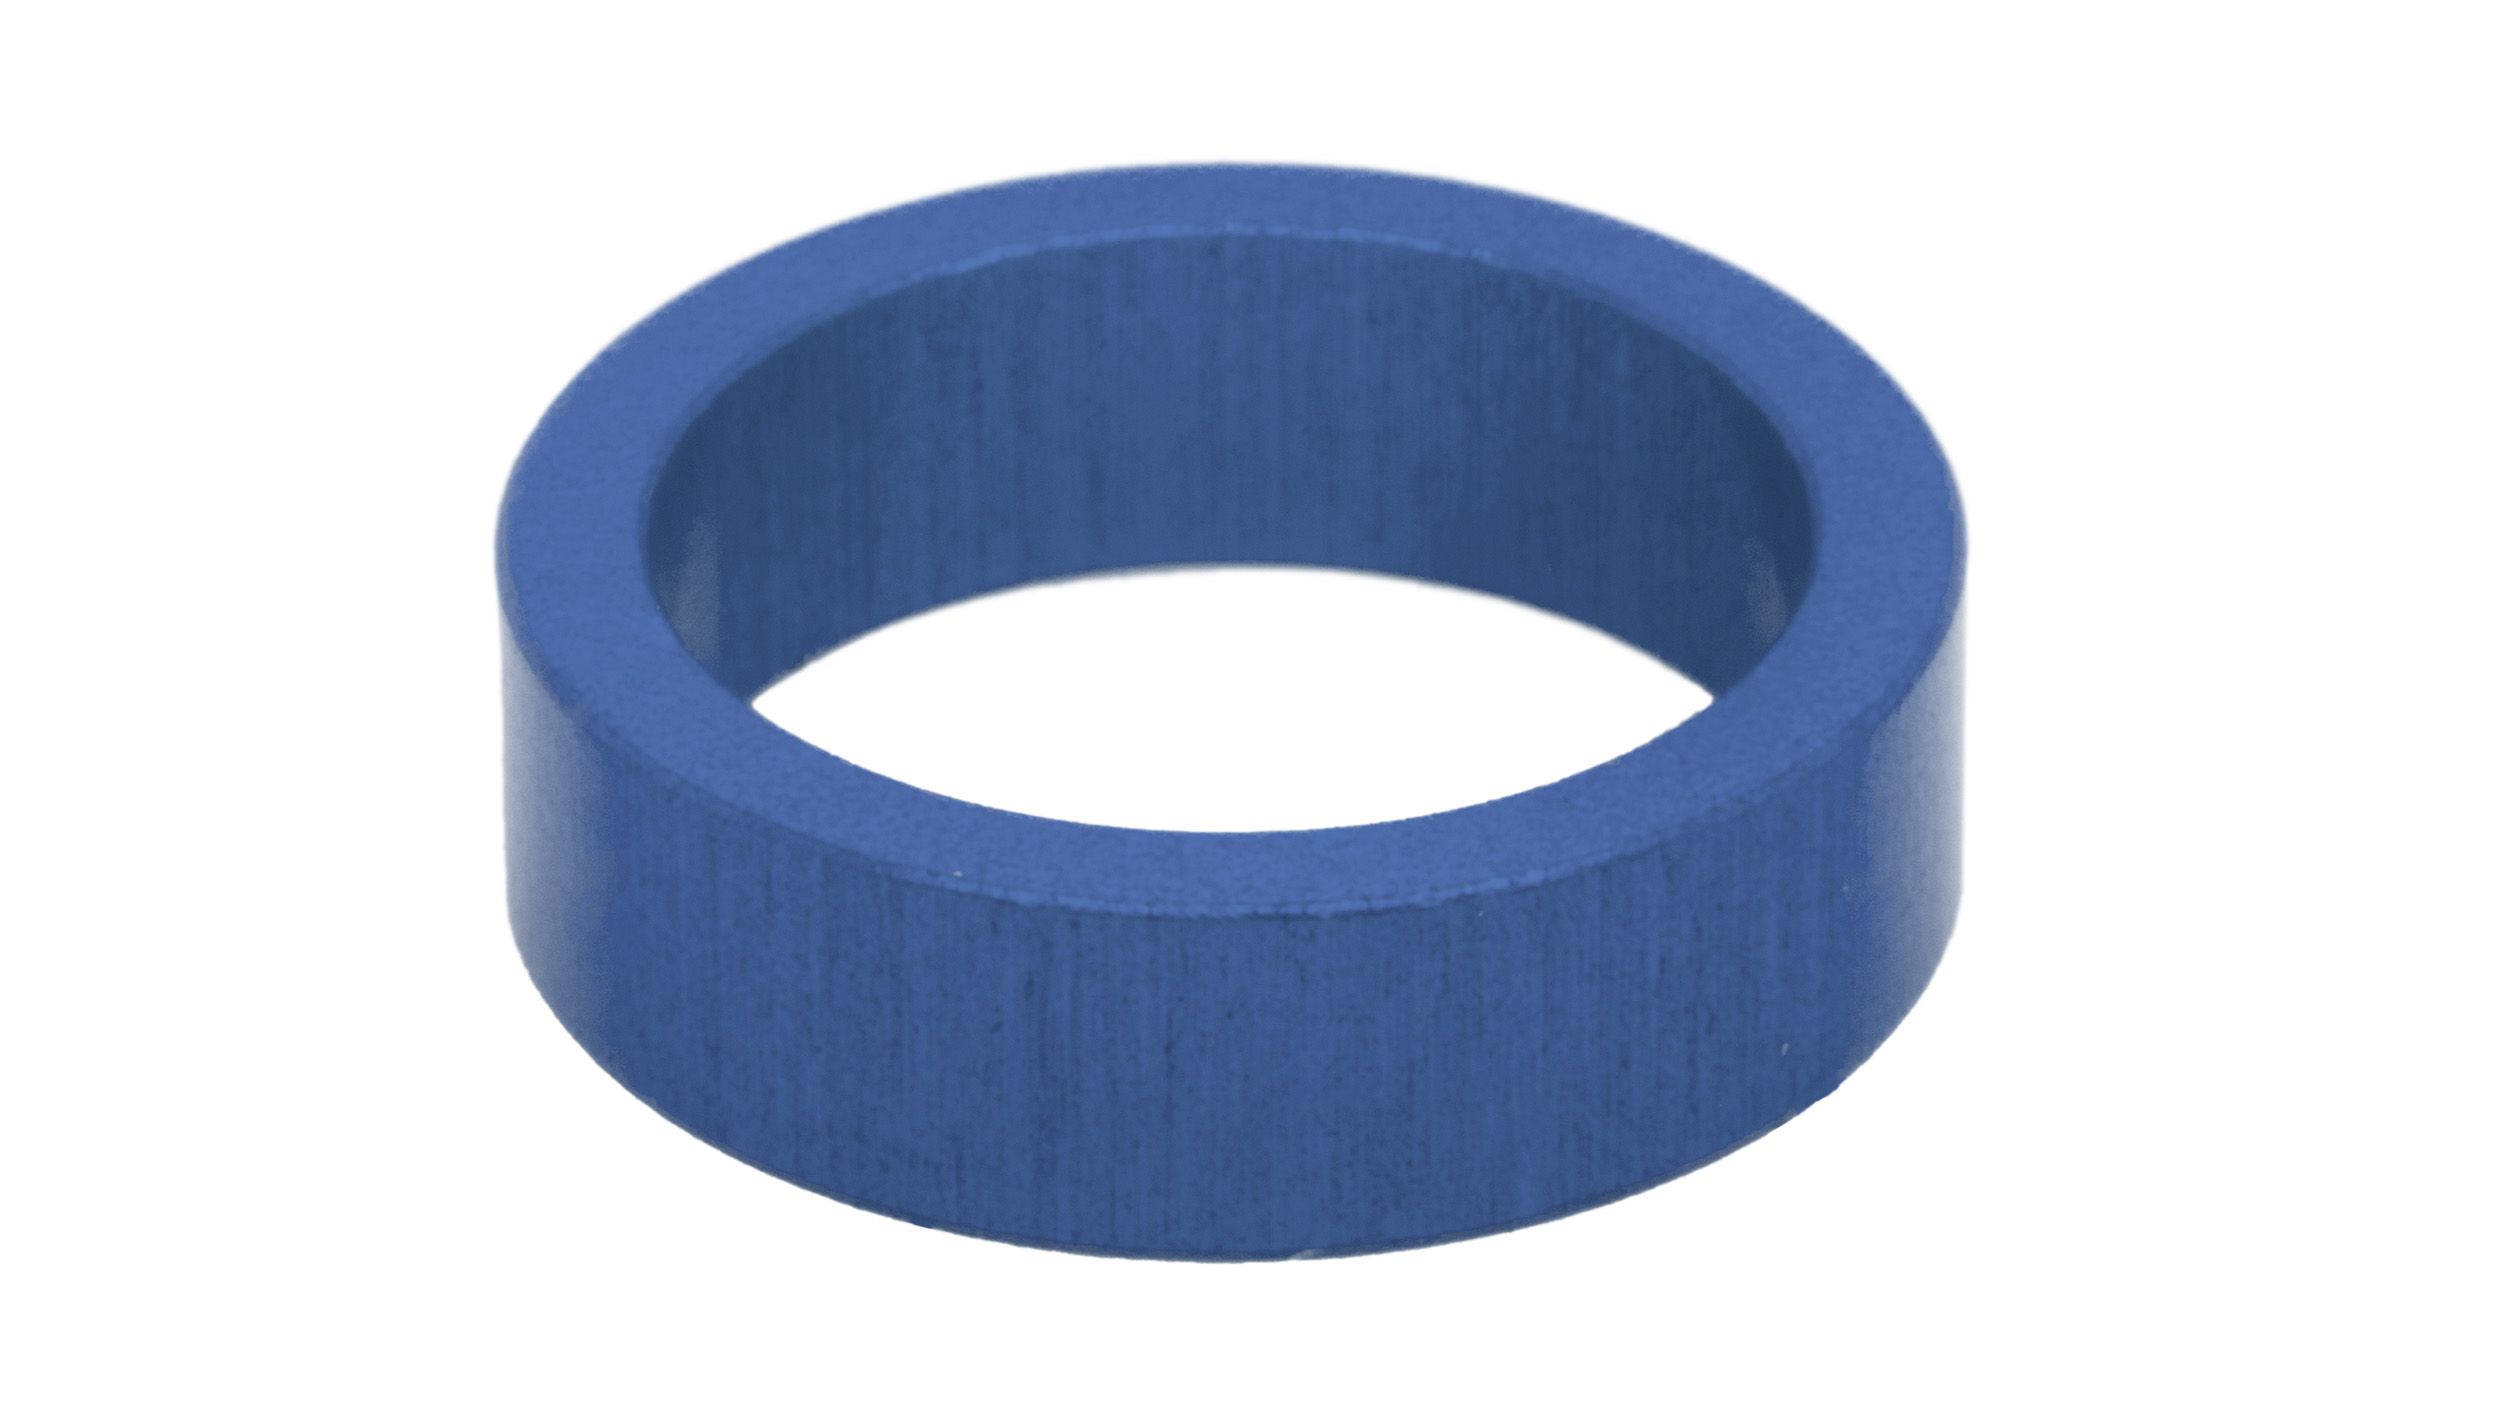 Identifikationsring, dunkelblau, für Petitpierre TR, Klinge 2,5 mm